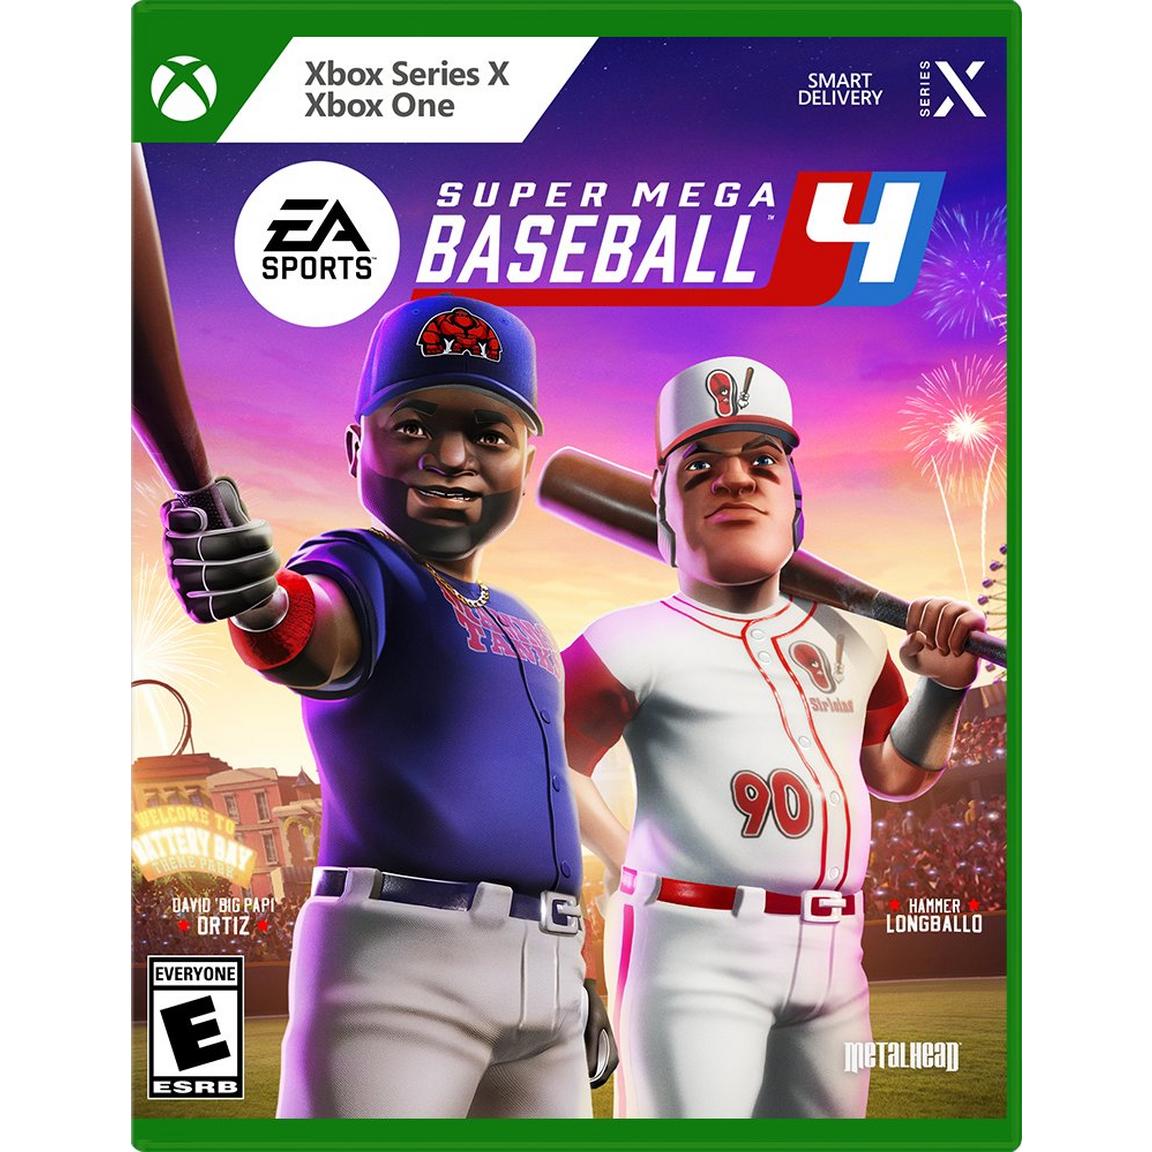 Super Mega Baseball 4 - Xbox Series X, Xbox One -  Electronic Arts, G3Q-01867